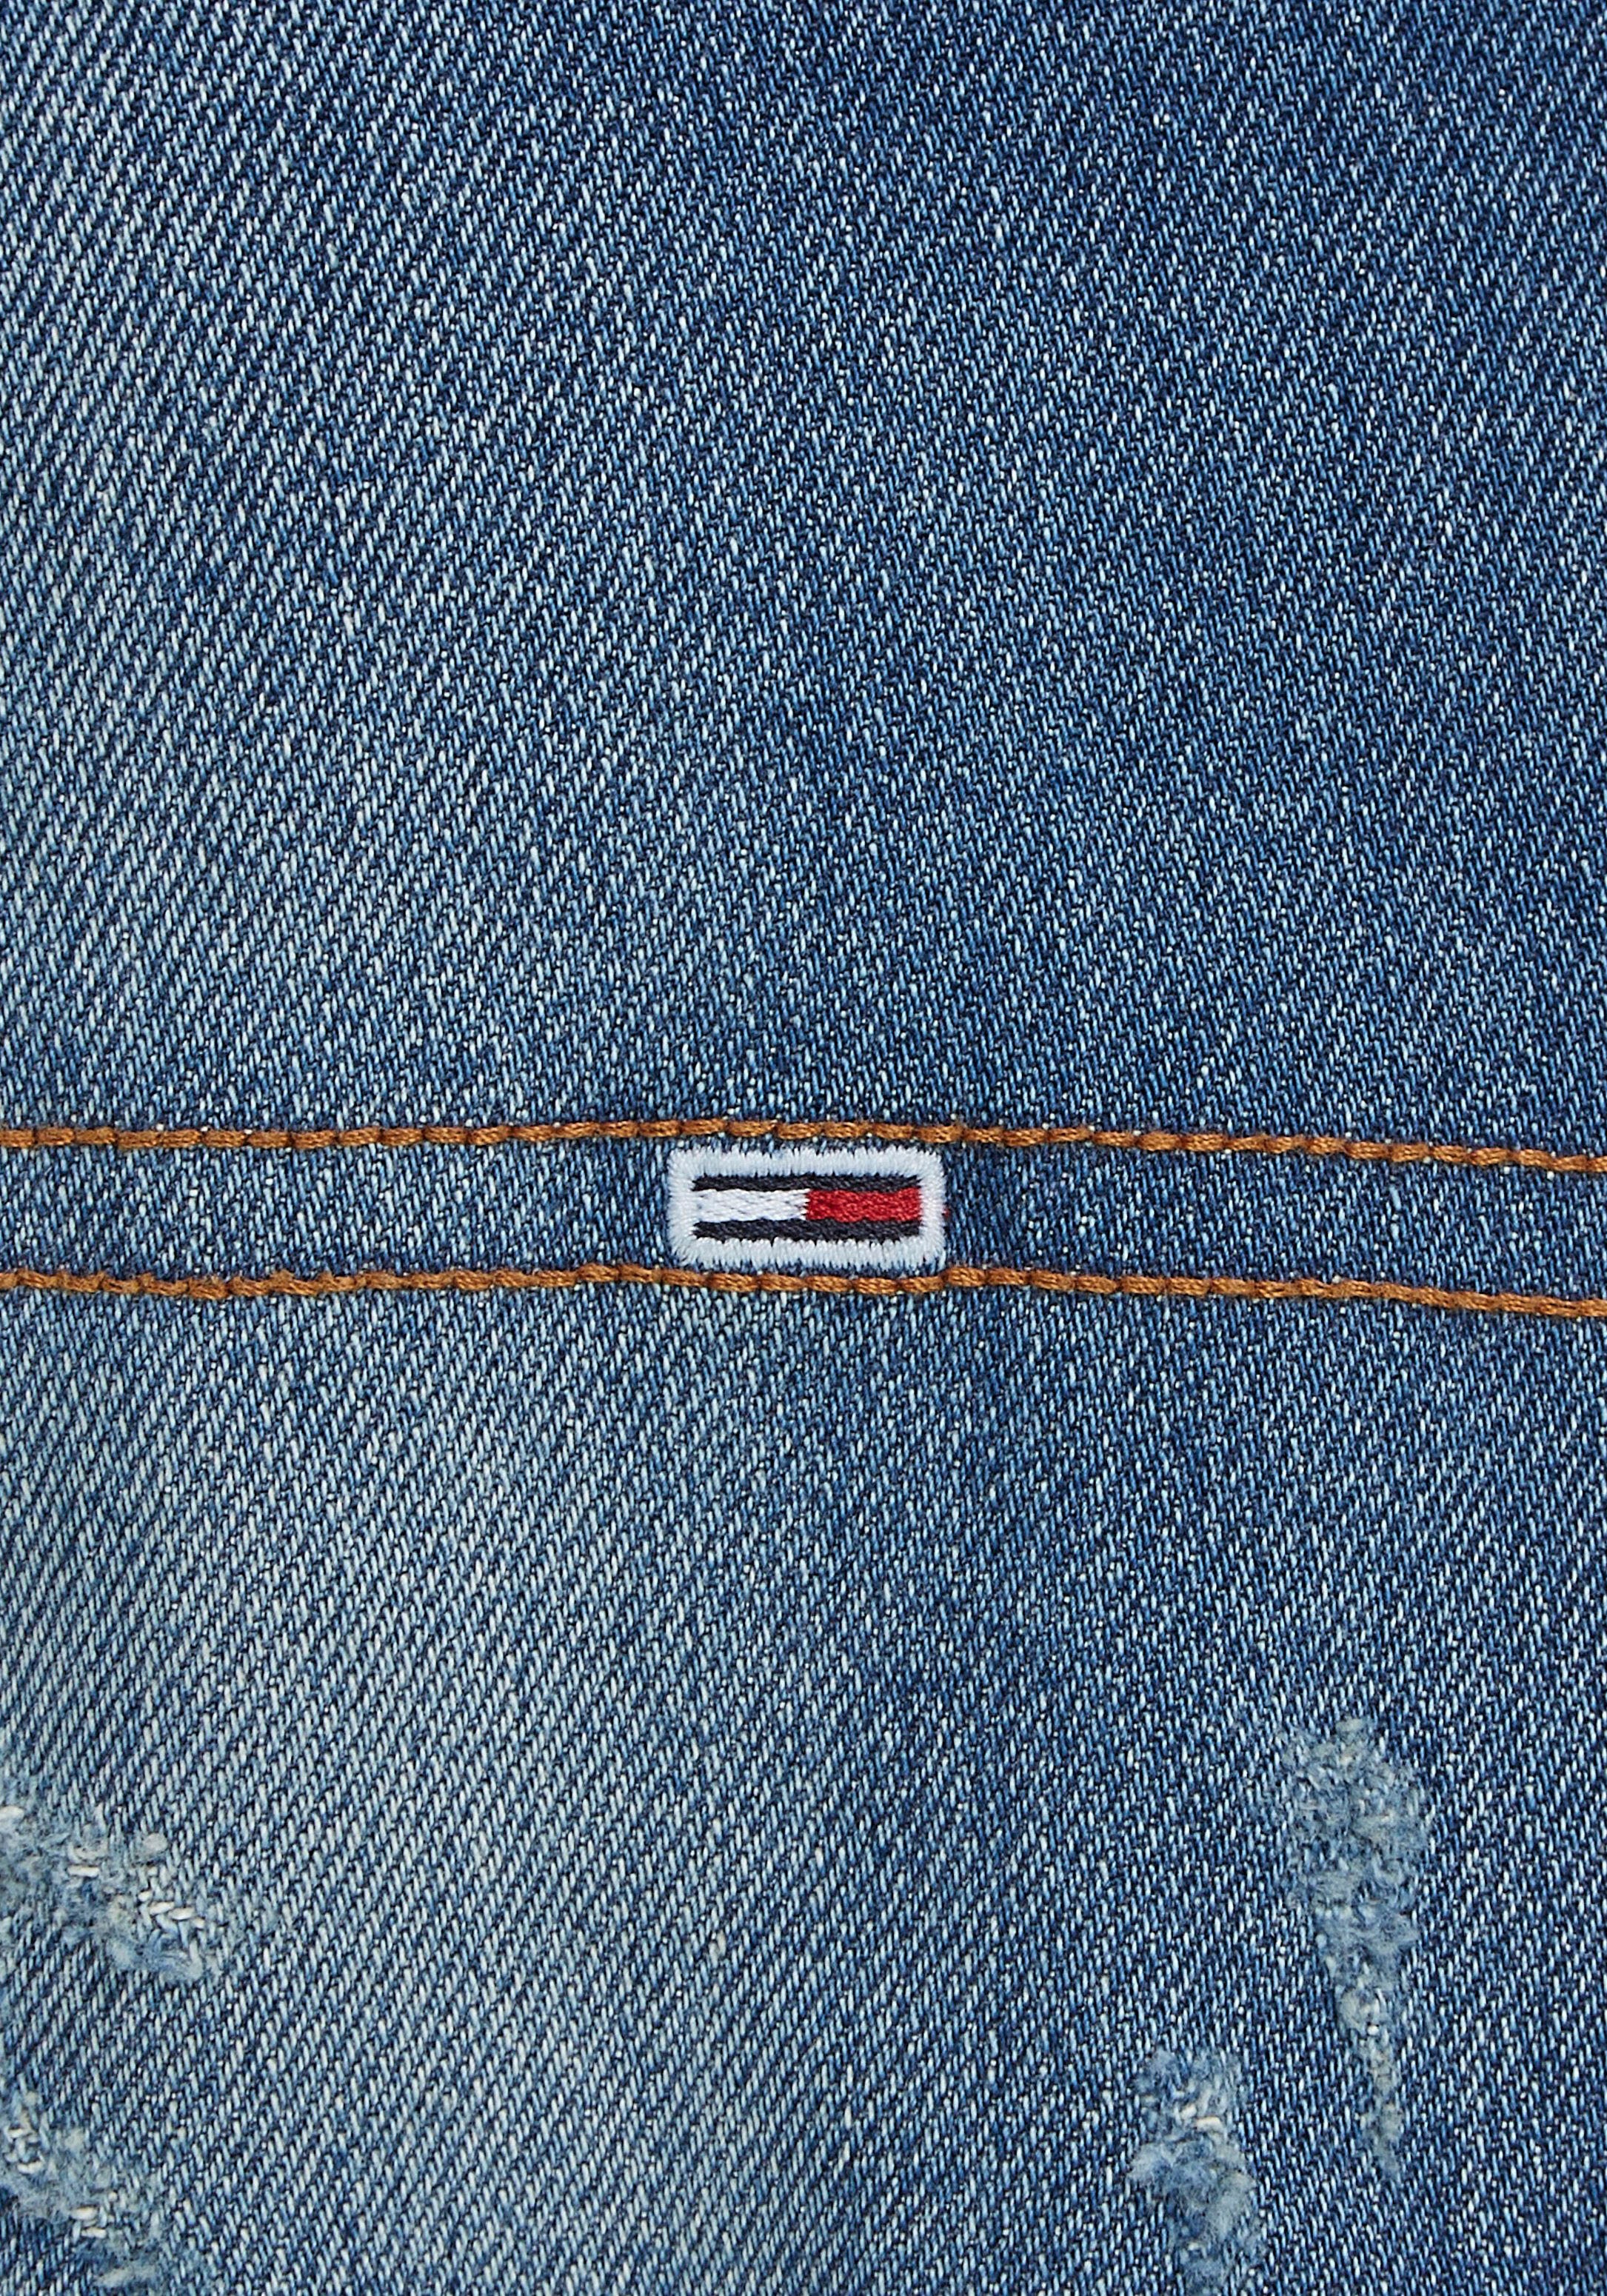 Tommy Jeans 5-Pocket-Jeans »SCANTON Y SLIM« online bestellen bei OTTO